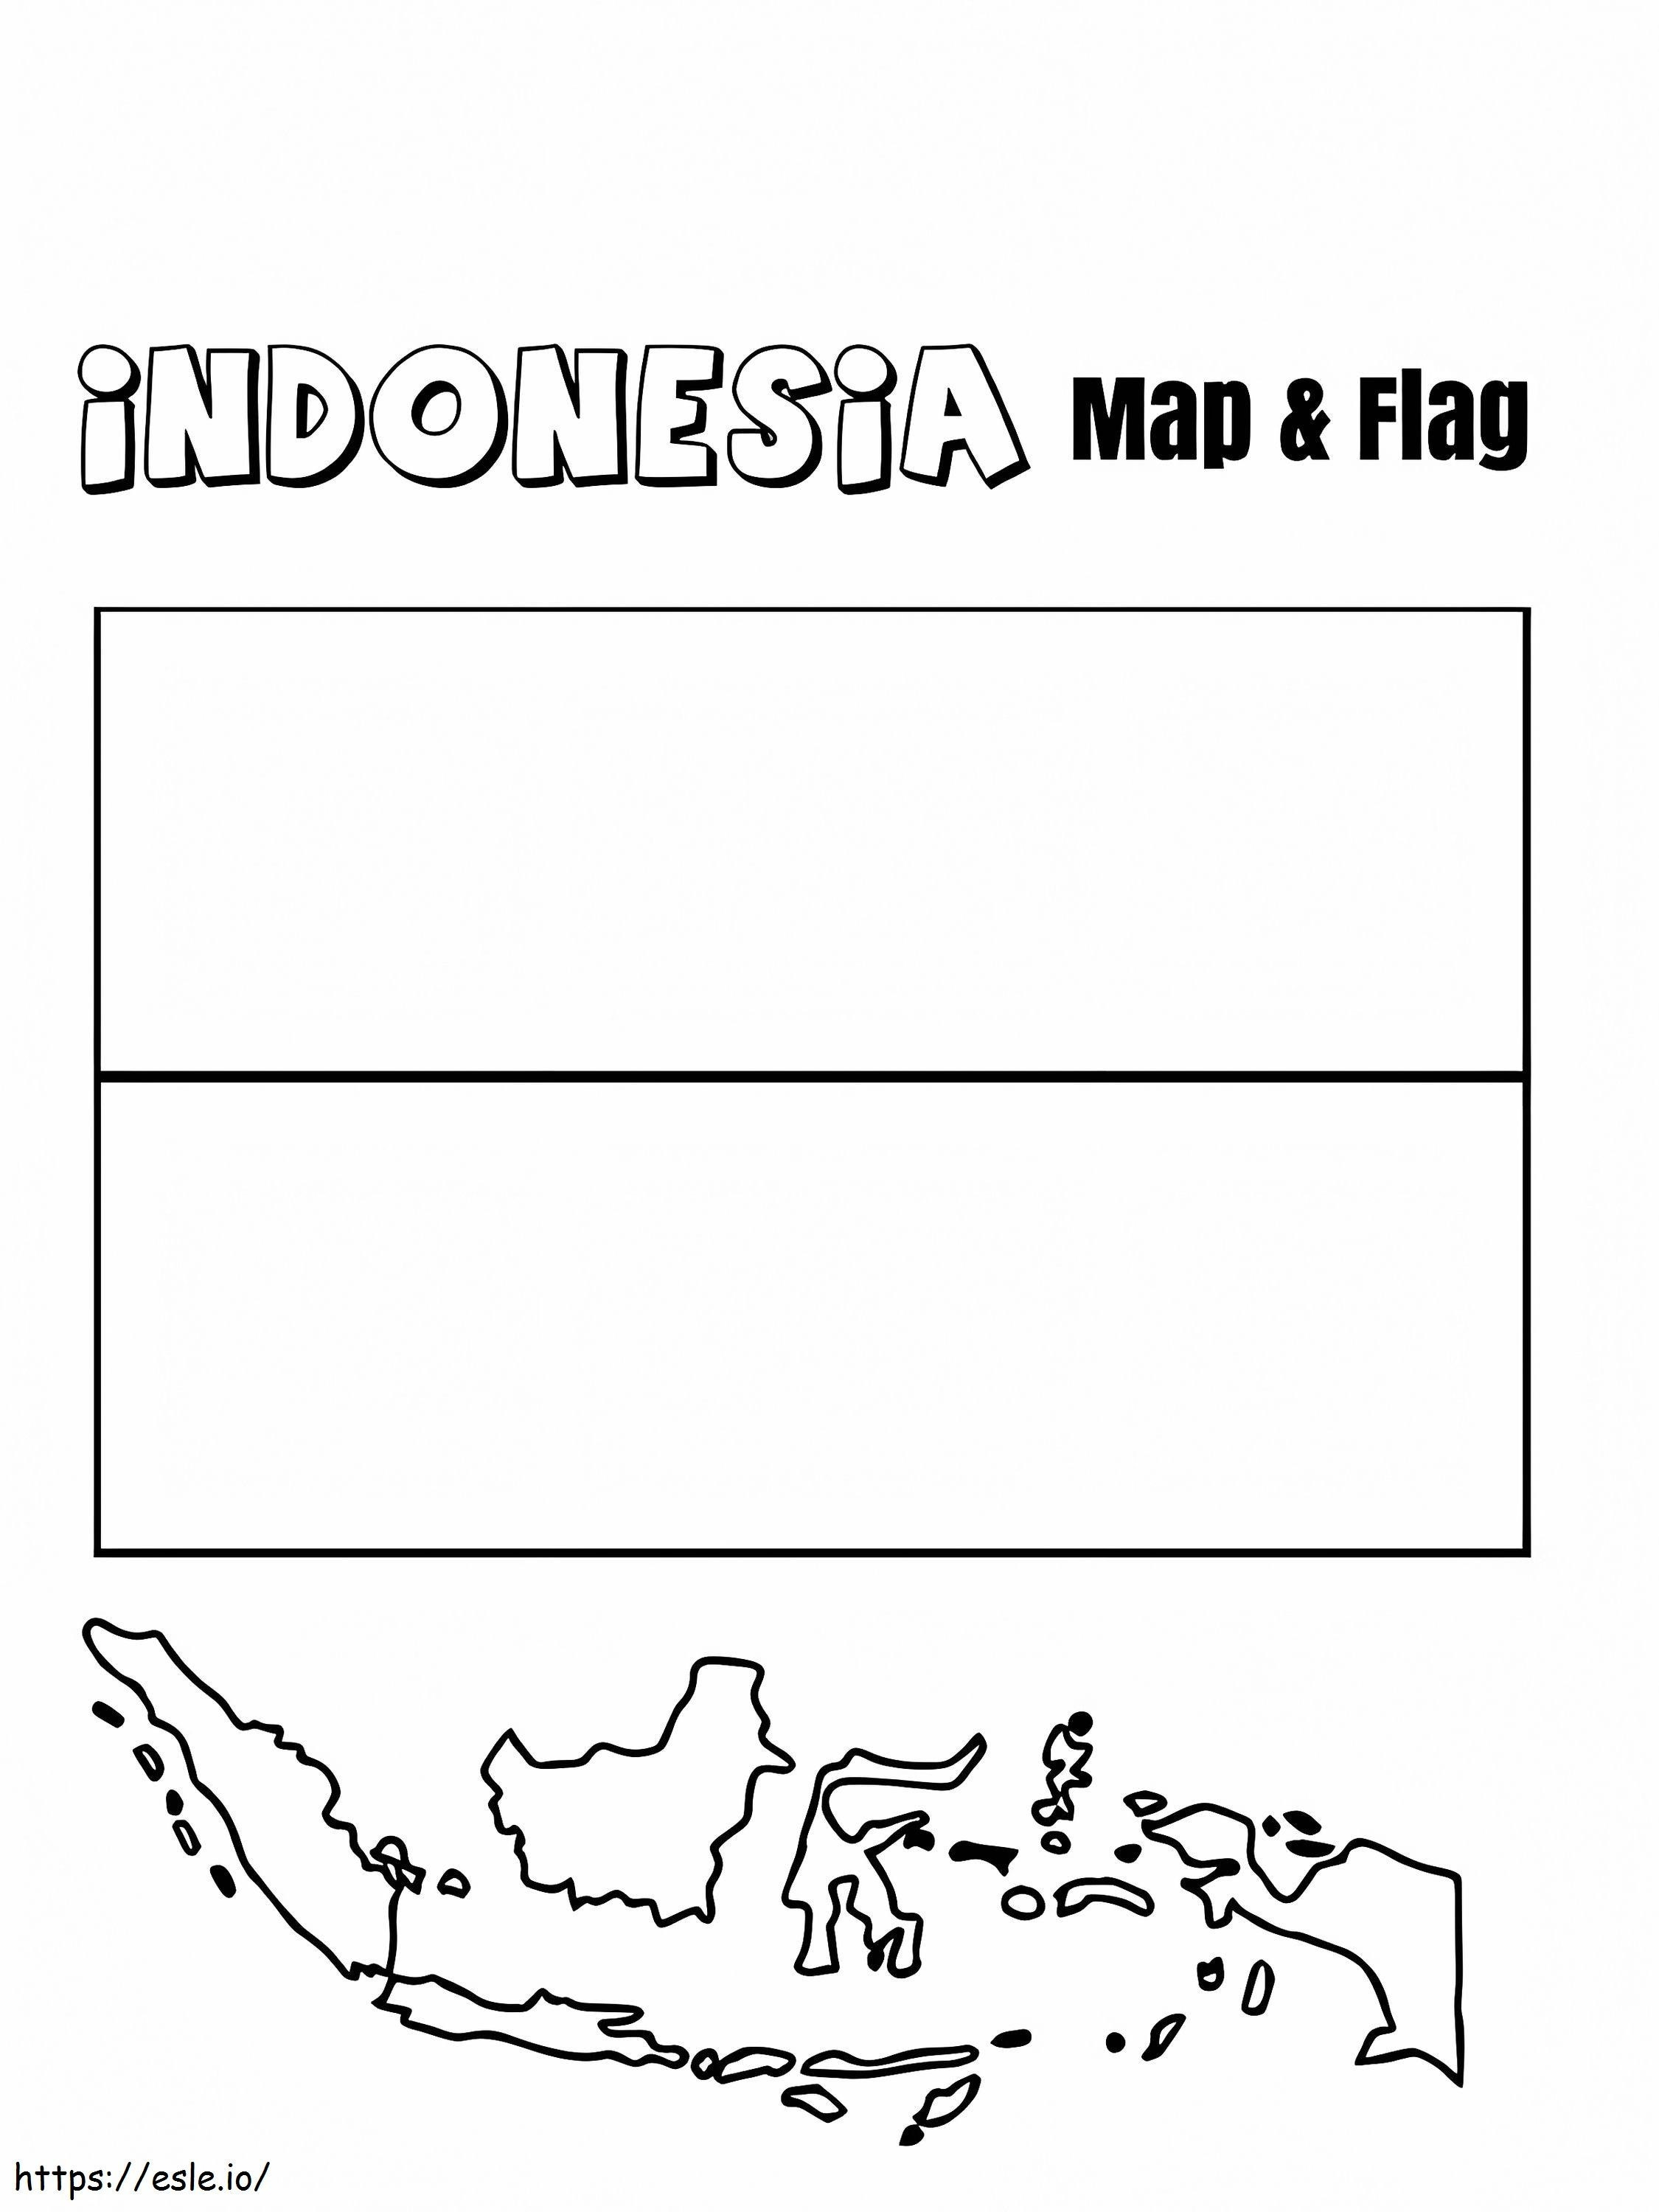 Bandeira e mapa da Indonésia para colorir